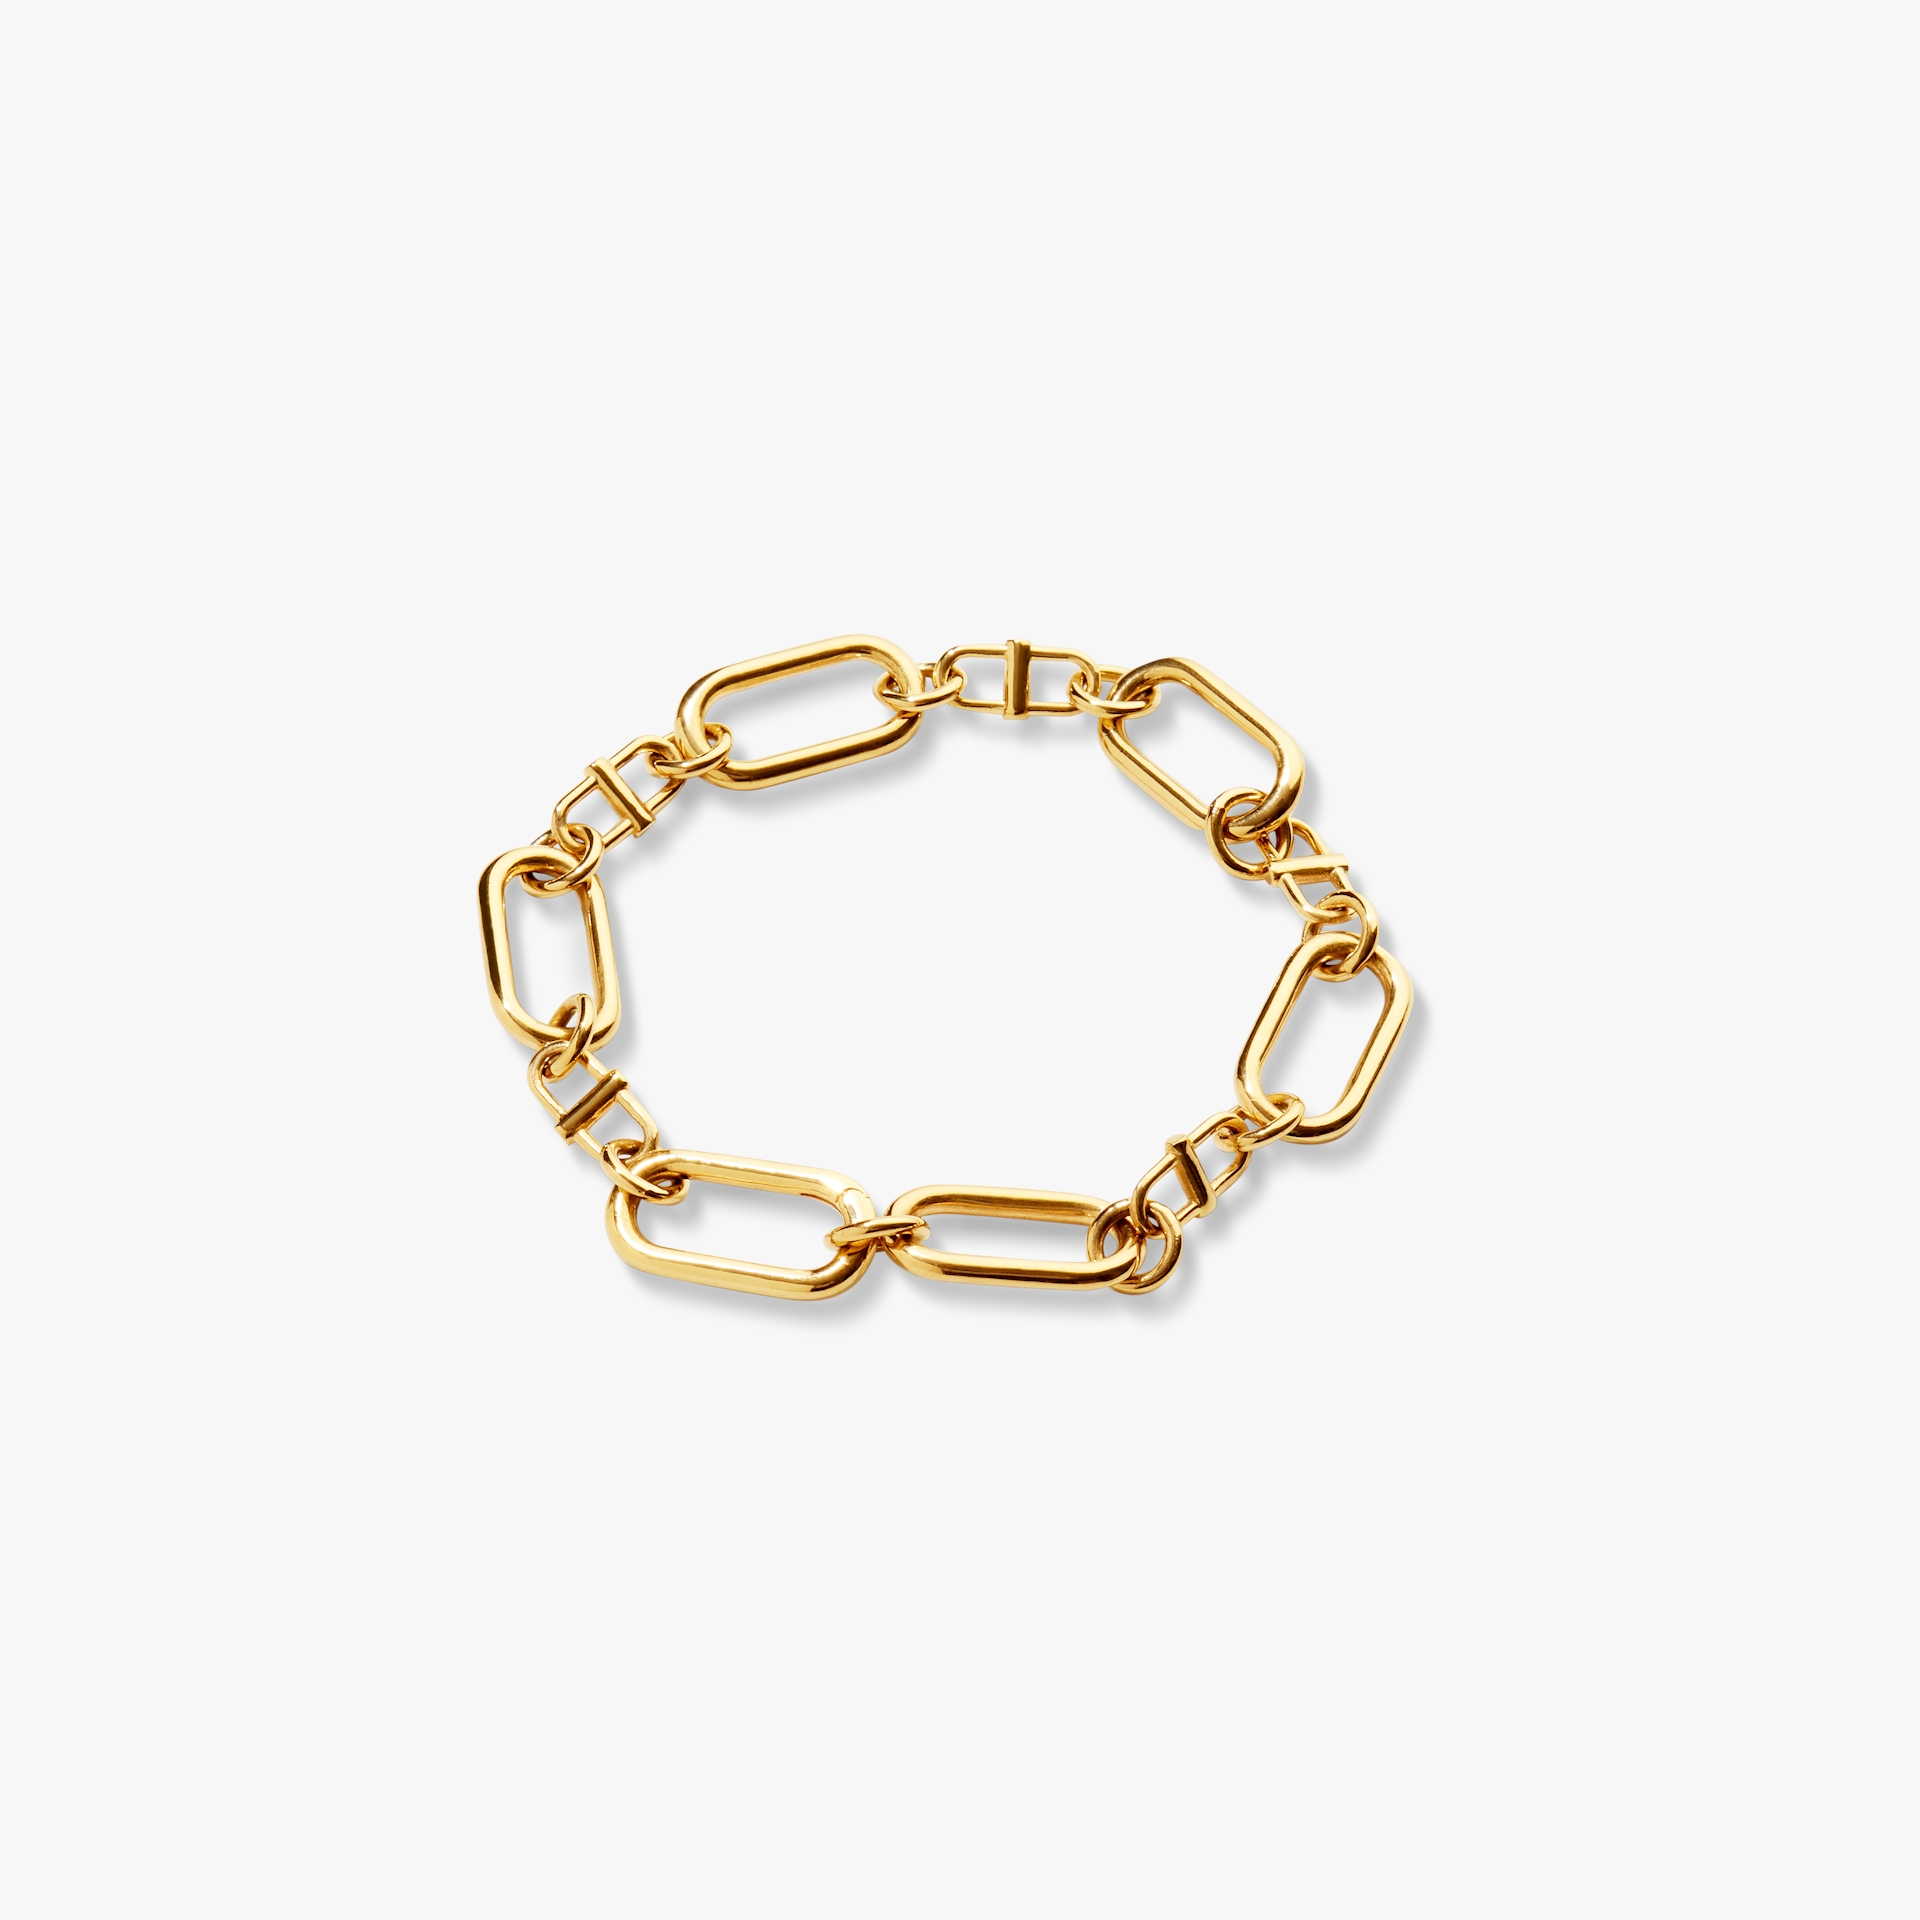 Heart Charm Lock Bracelet - Gold Vermeil